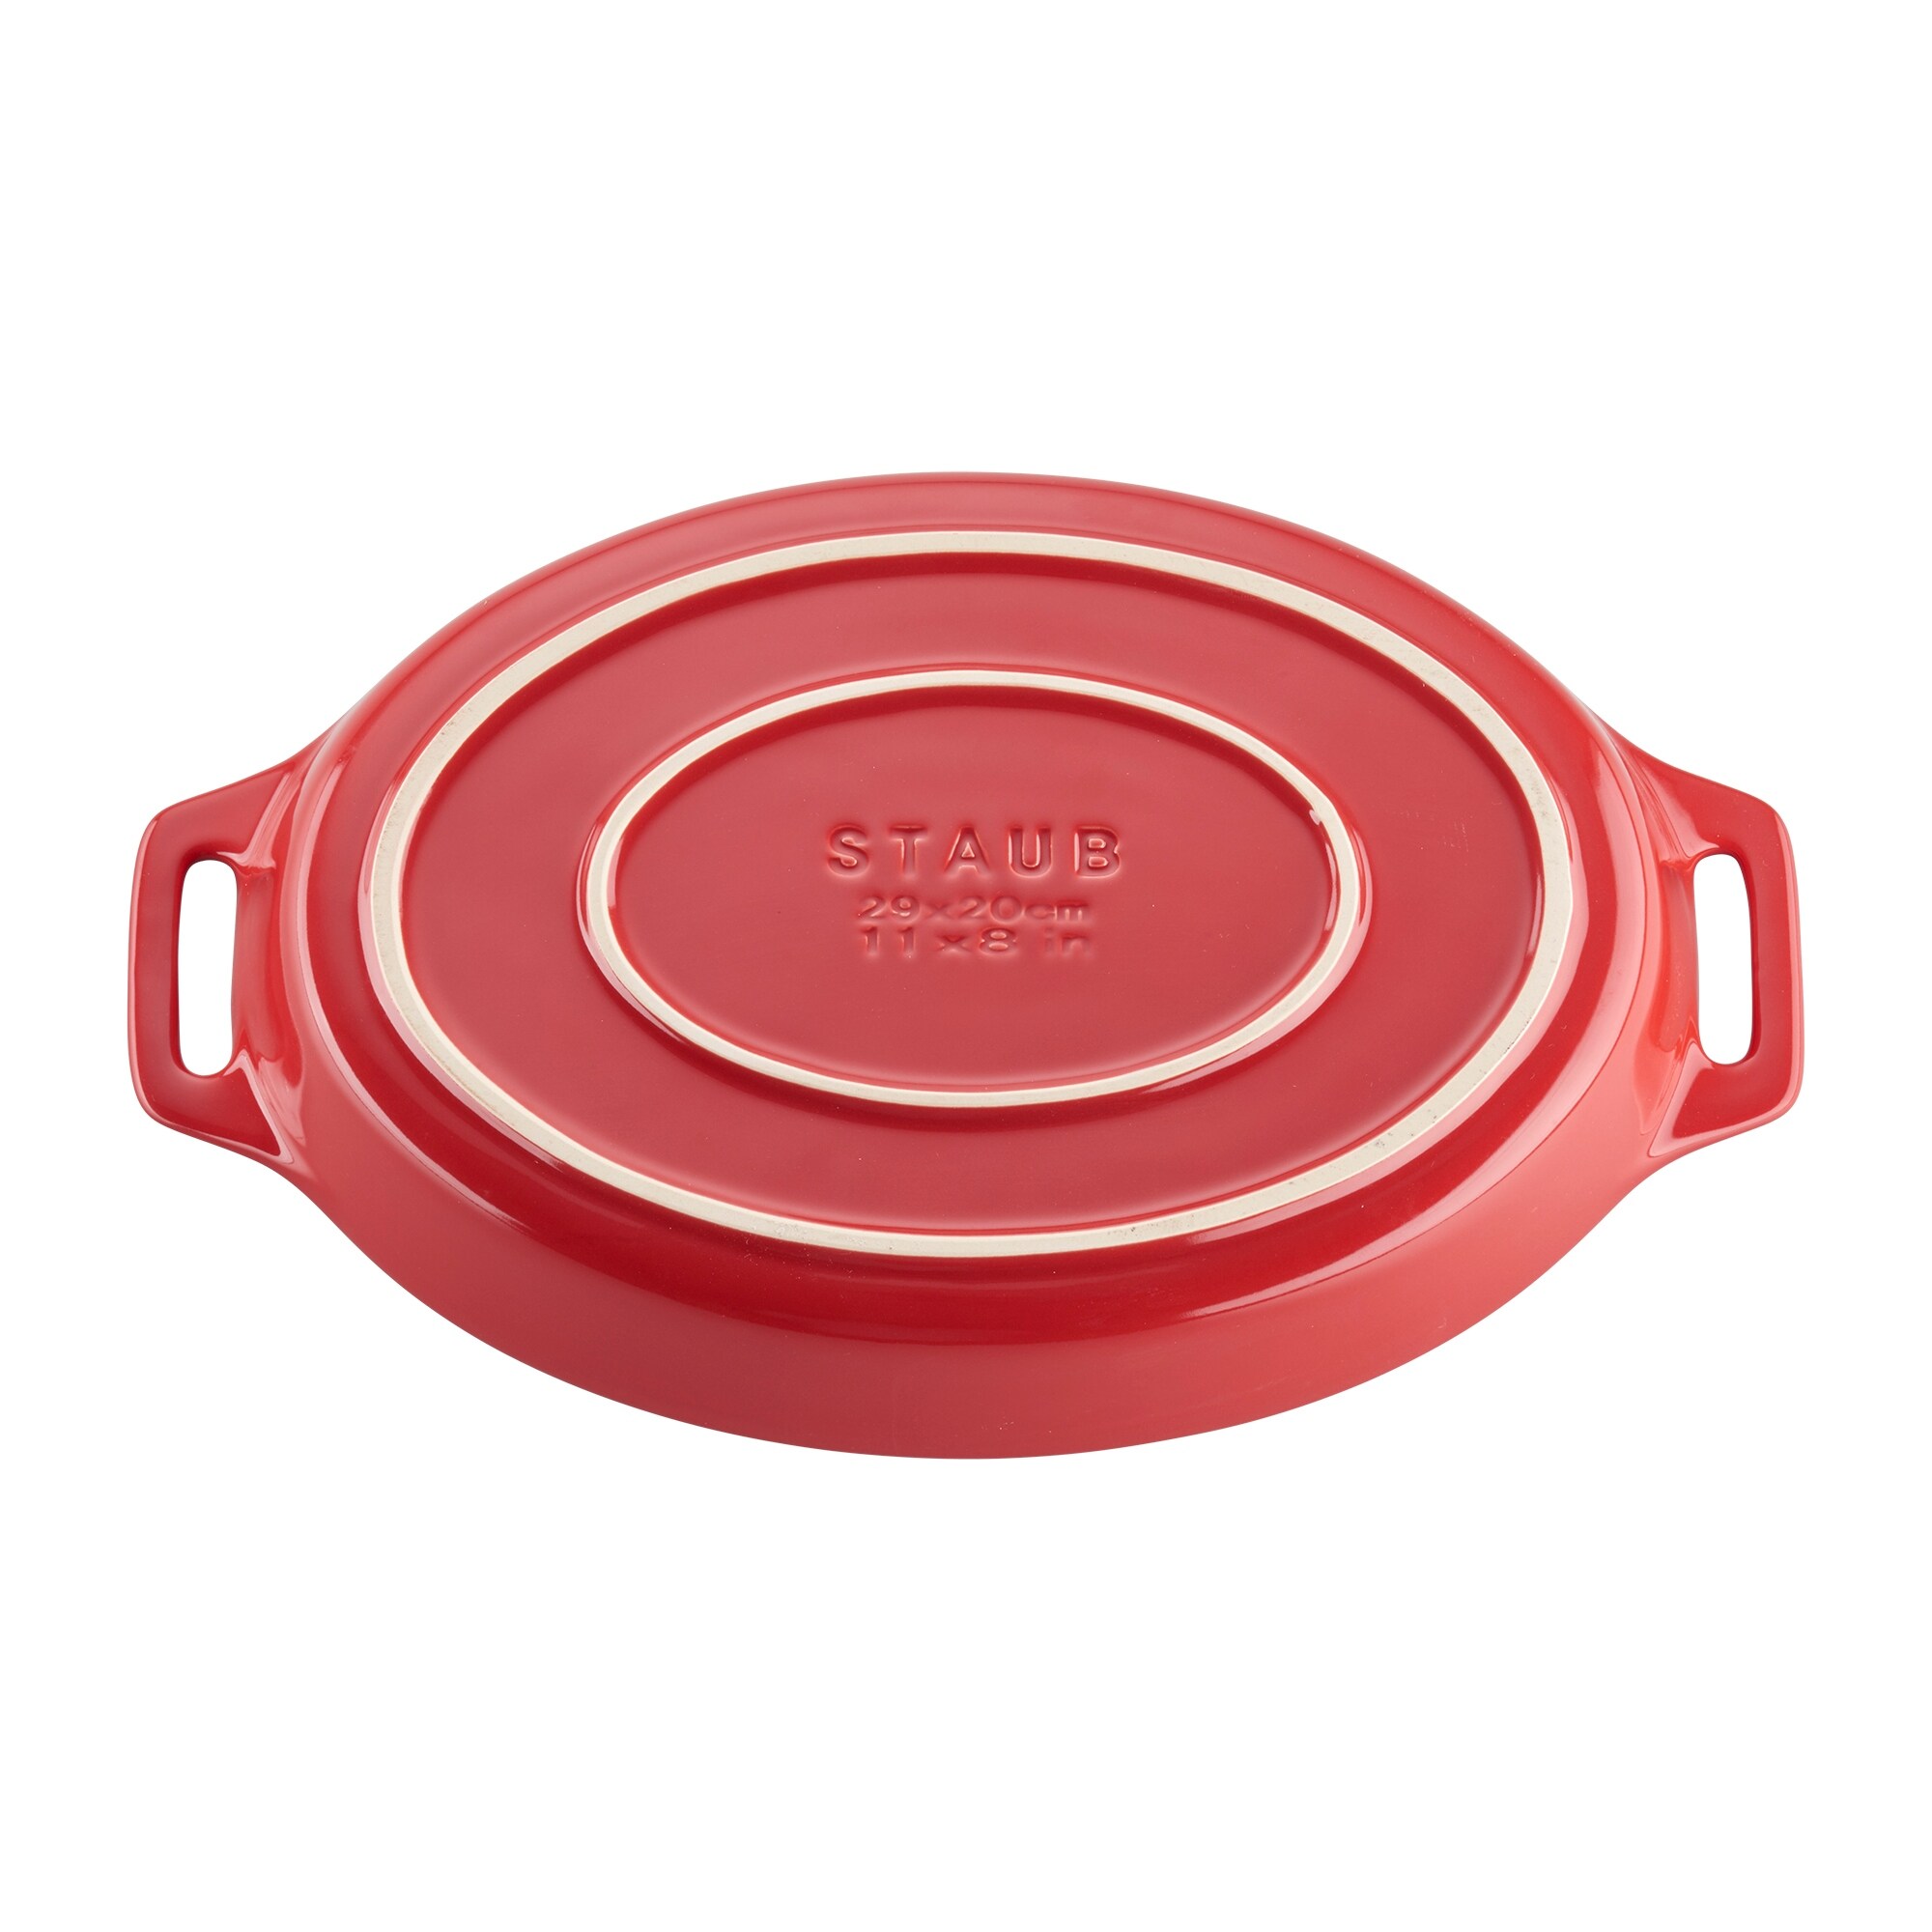 STAUB Cast Iron Oval Baking Dish - Bed Bath & Beyond - 23077300